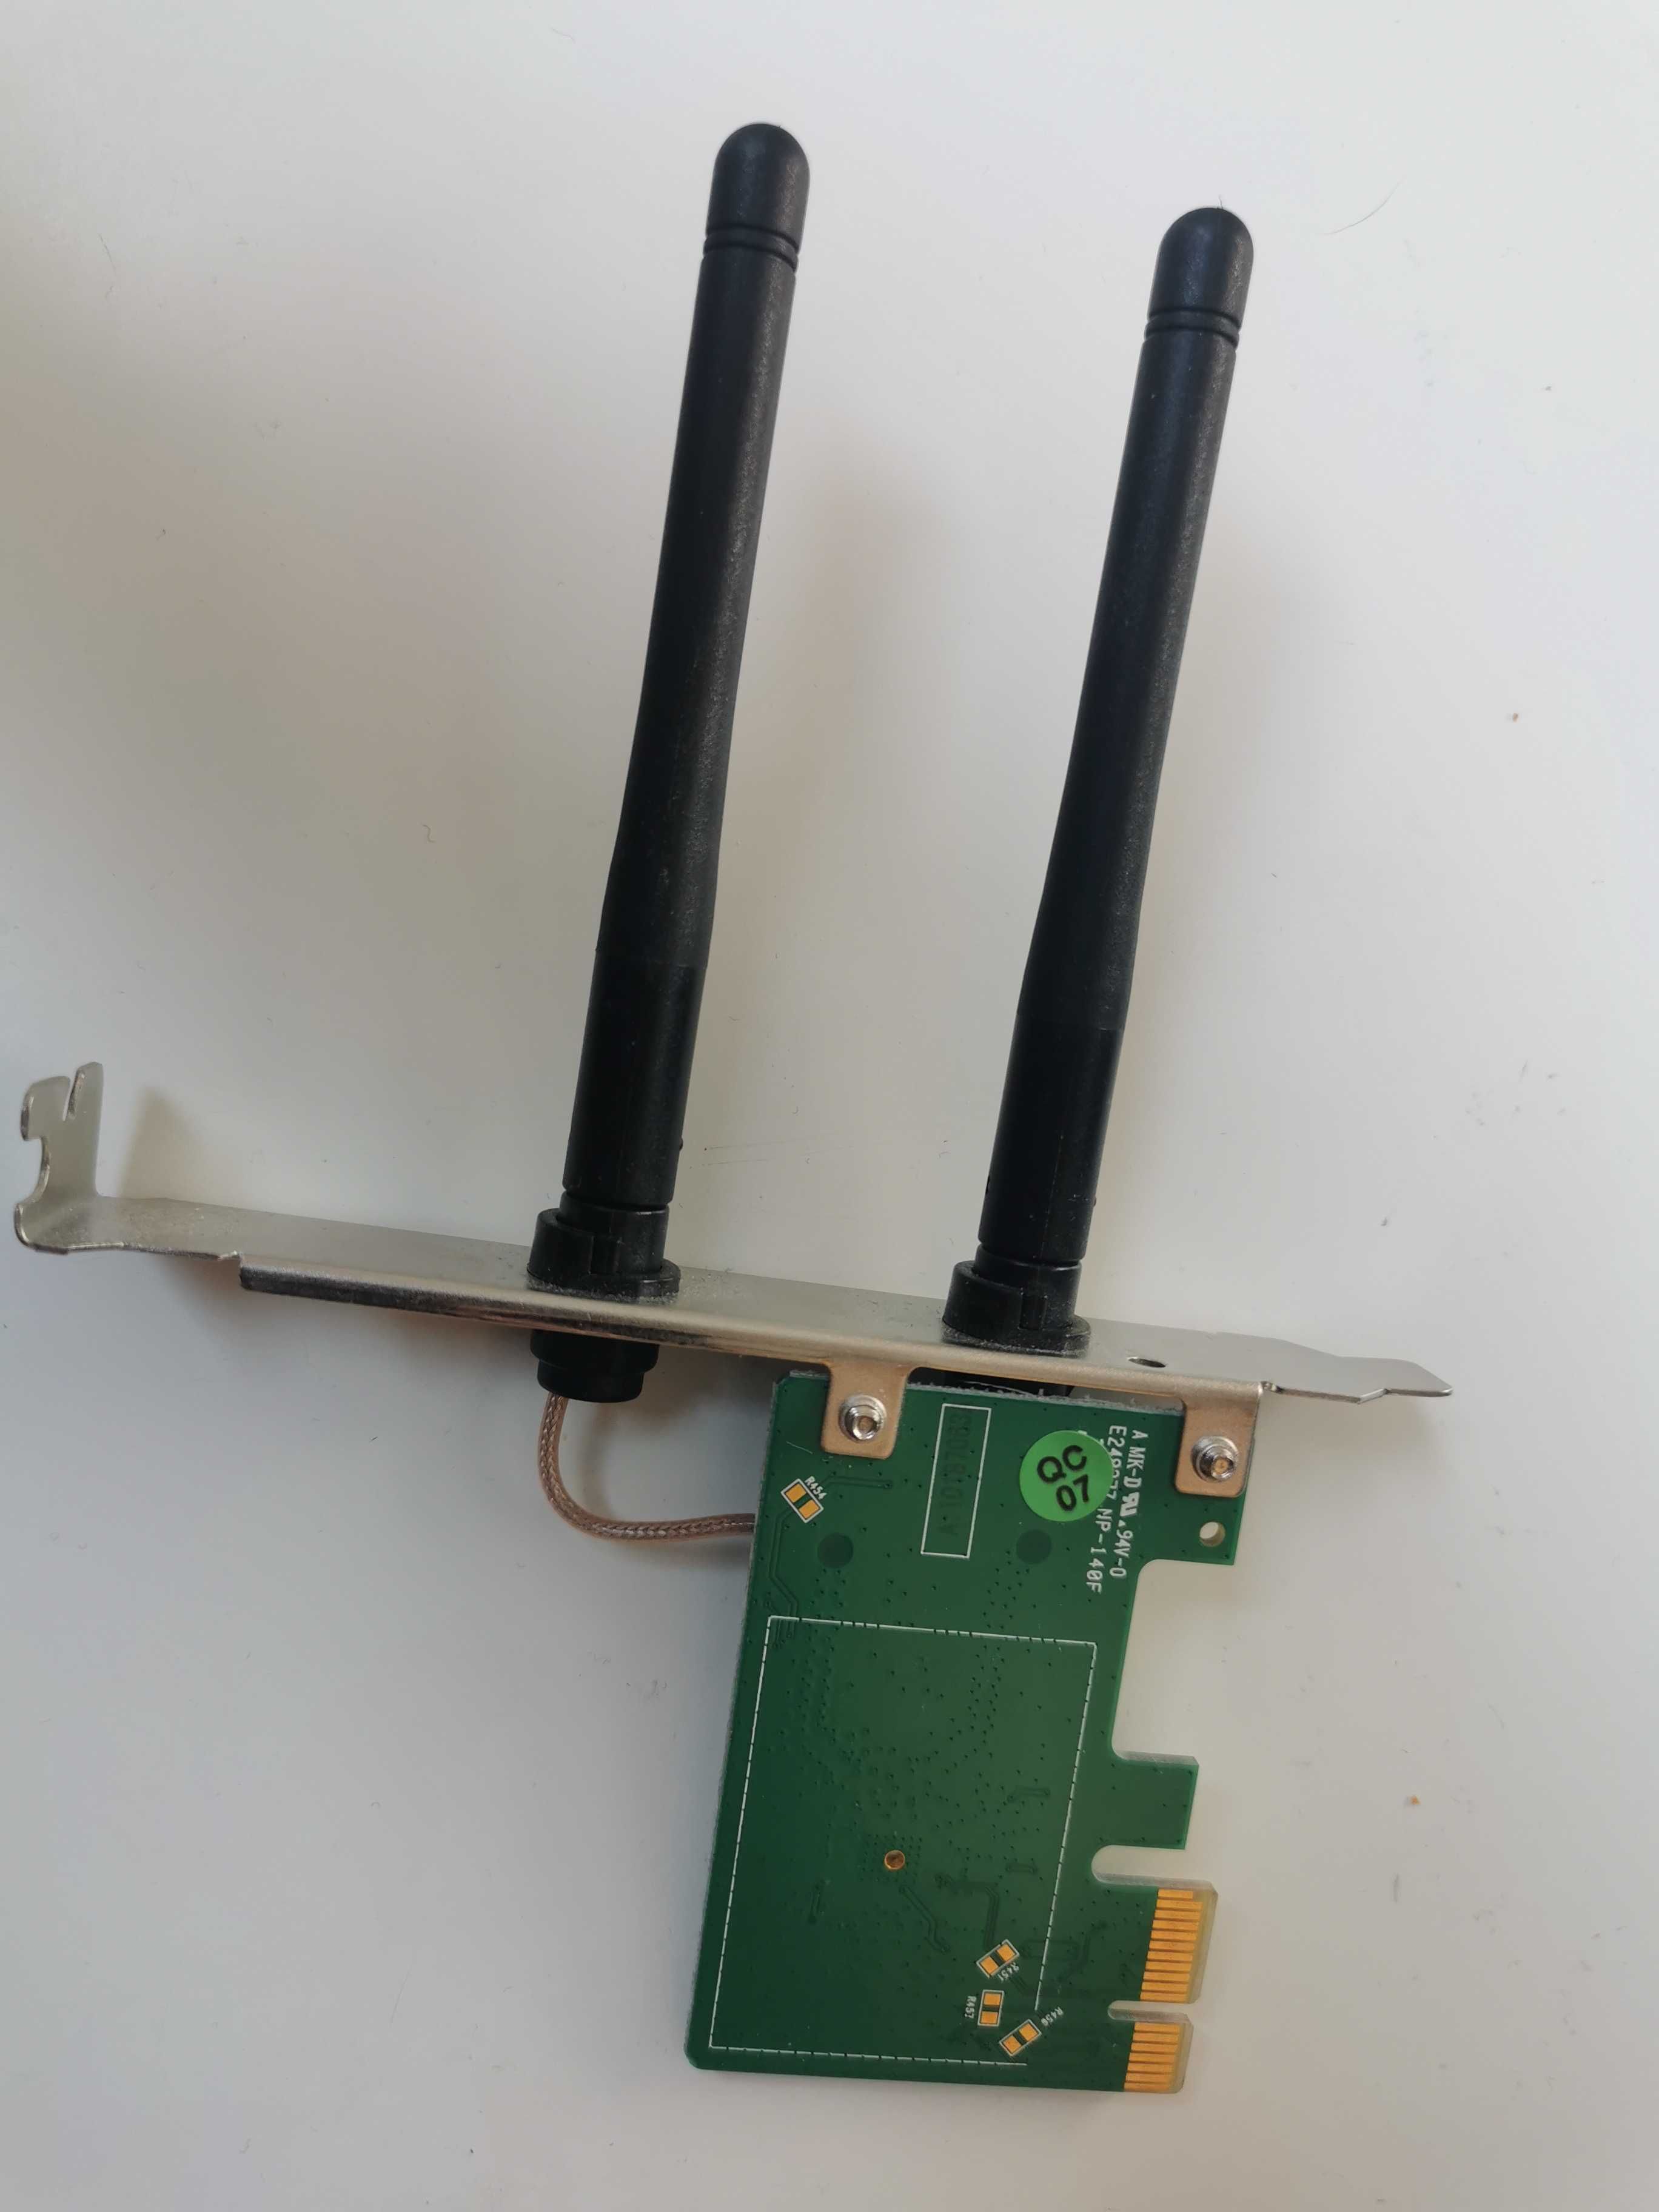 Karta sieciowa PCI-E Tenda, 300 Mbps - szybka, 2 anteny, malutka!